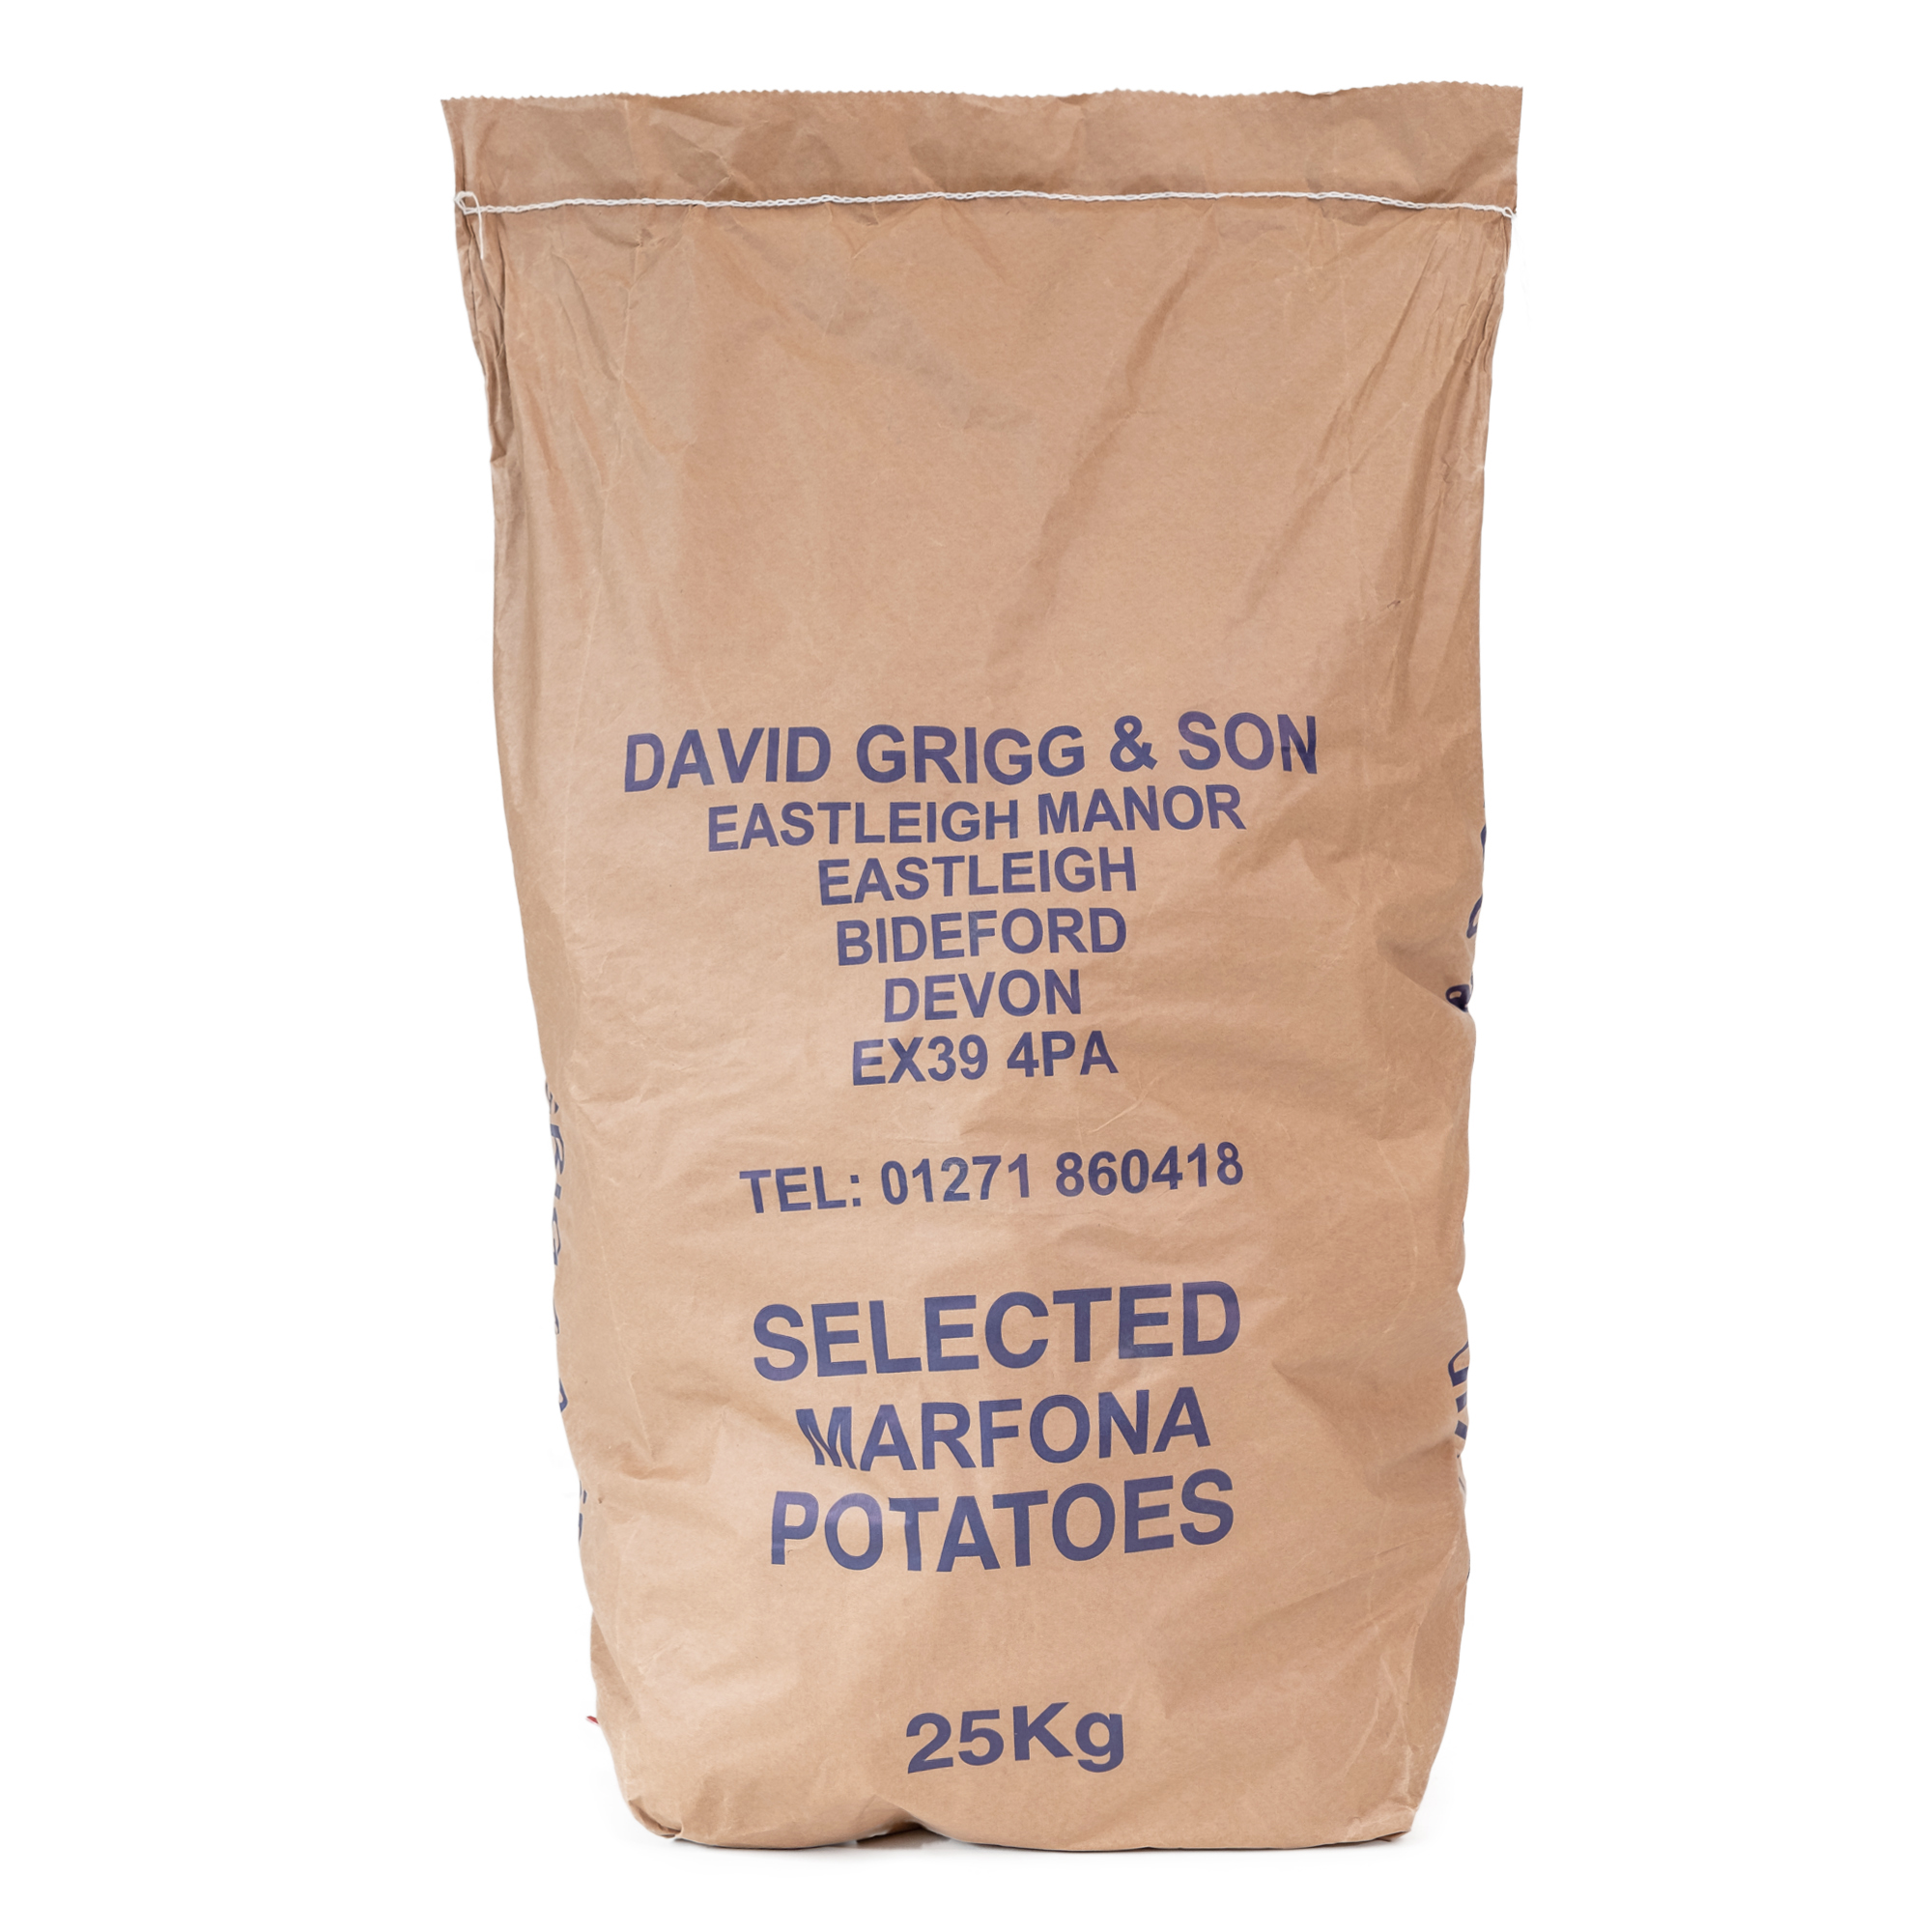 Potatoes - Marfona or Similar 25kg